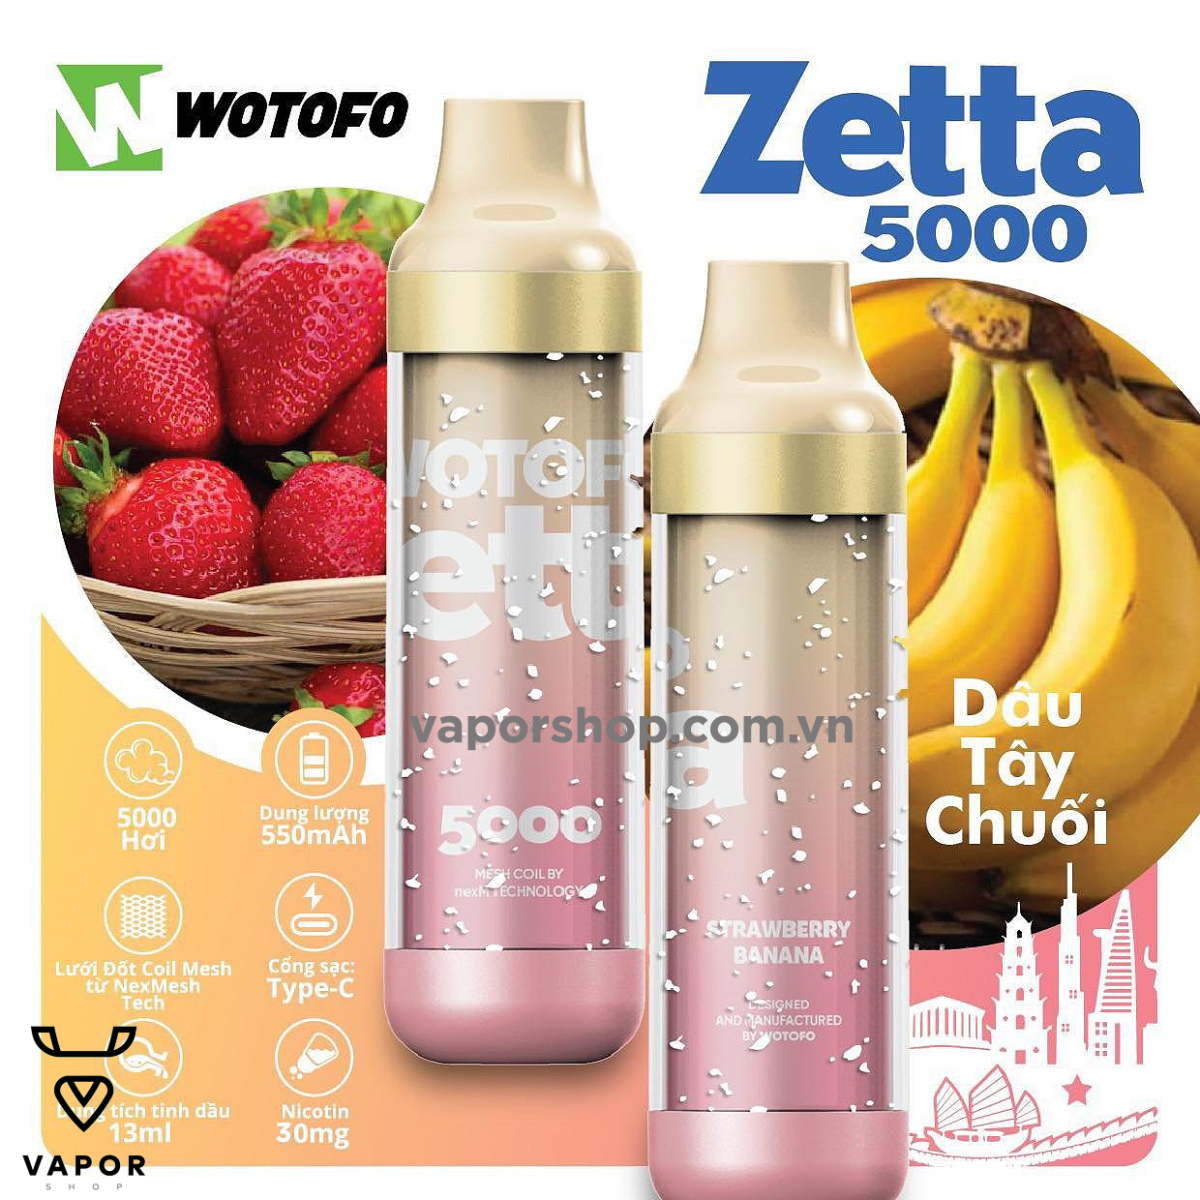 Wotofo Zetta 5000 puffs Strawberry Banana ( Dâu chuối ) - pod dùng 1 lần chính hãng tại Vaporshop